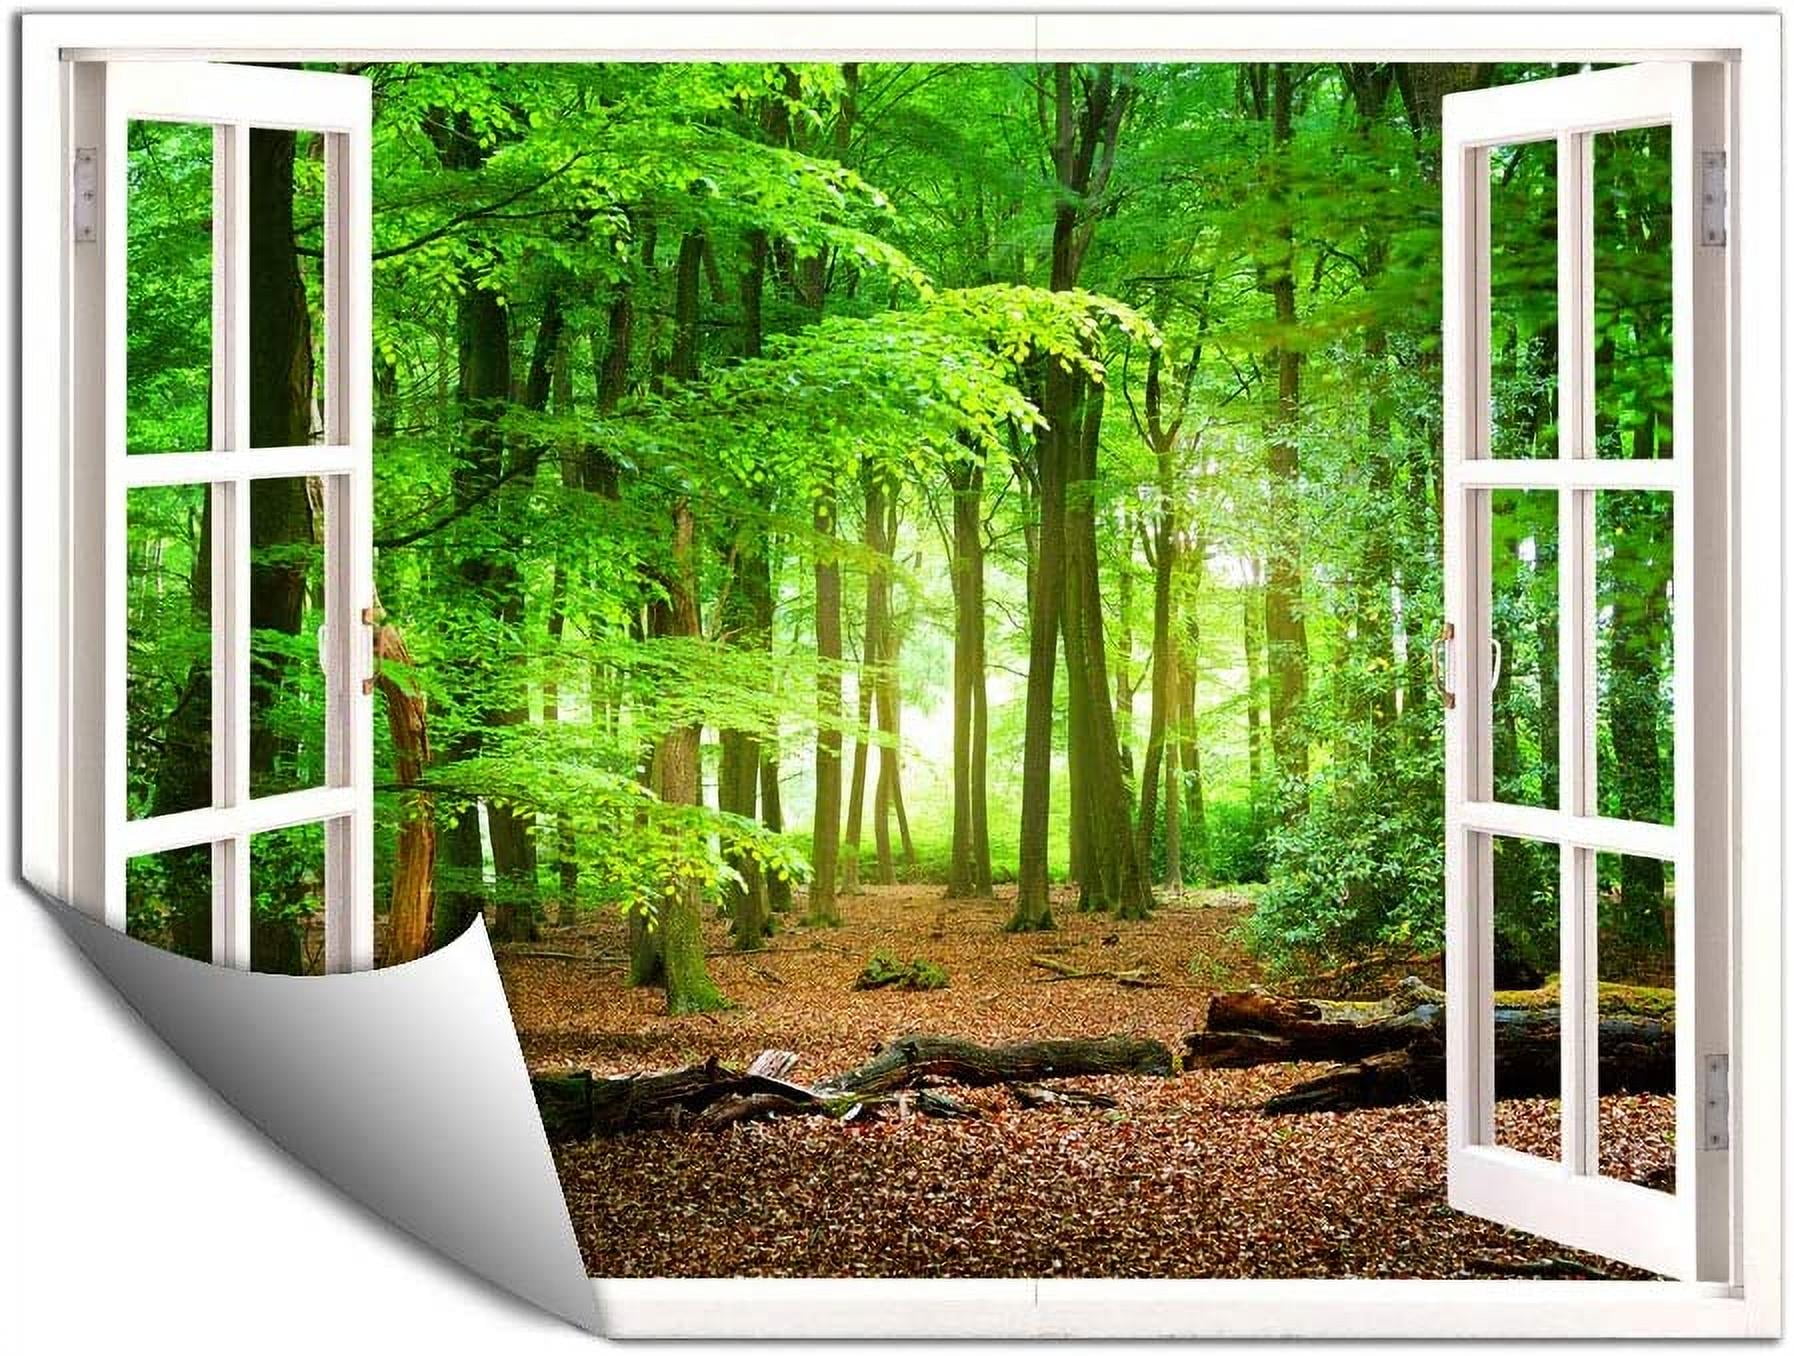 Forest Sun Nature 3D Window Decal WALL STICKER Home Decoration Art Mural Poster 